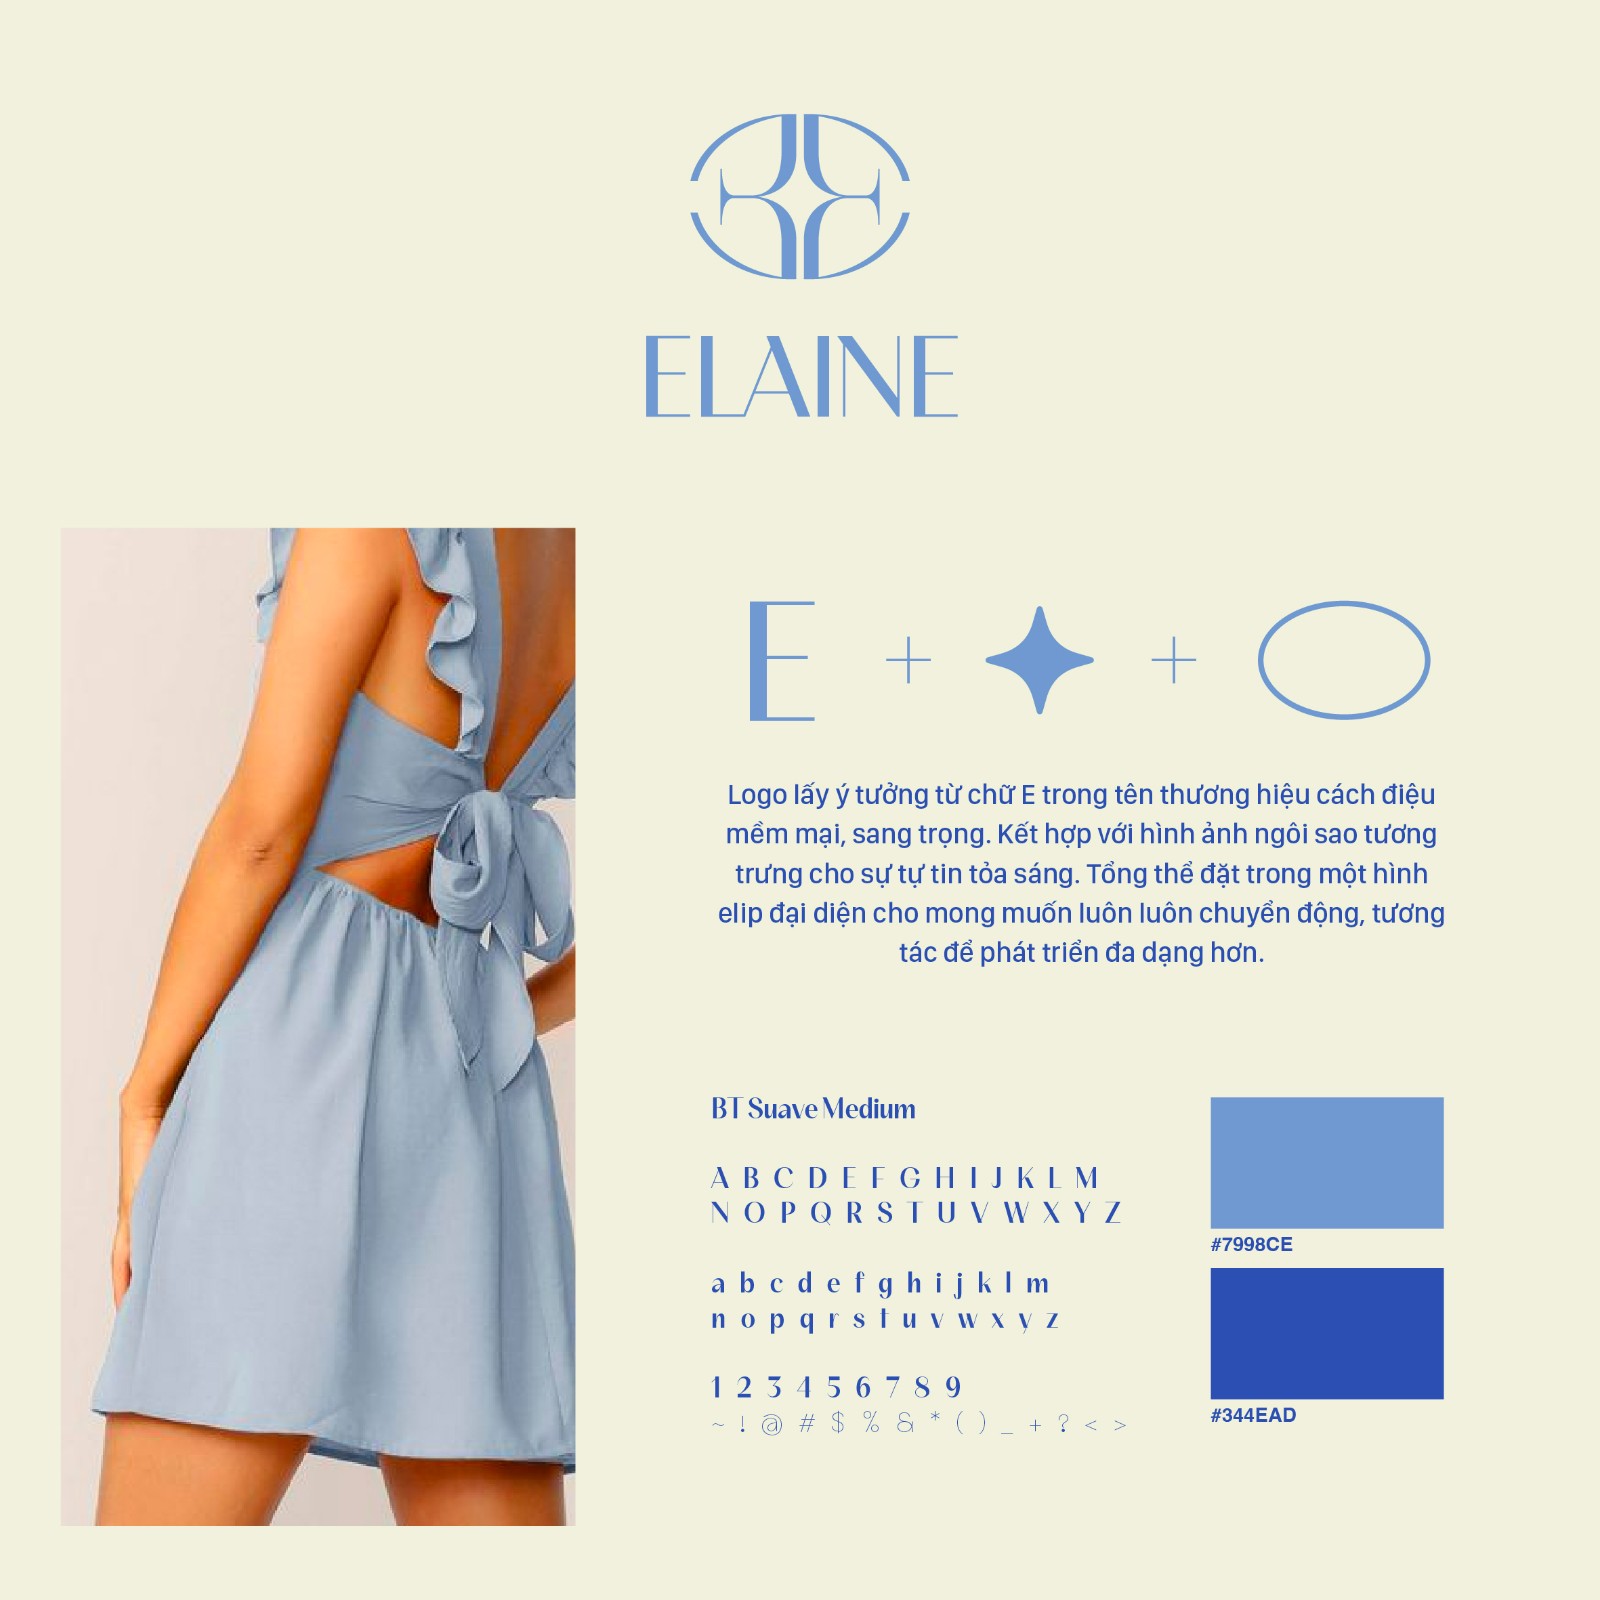 Elaine-05.jpg